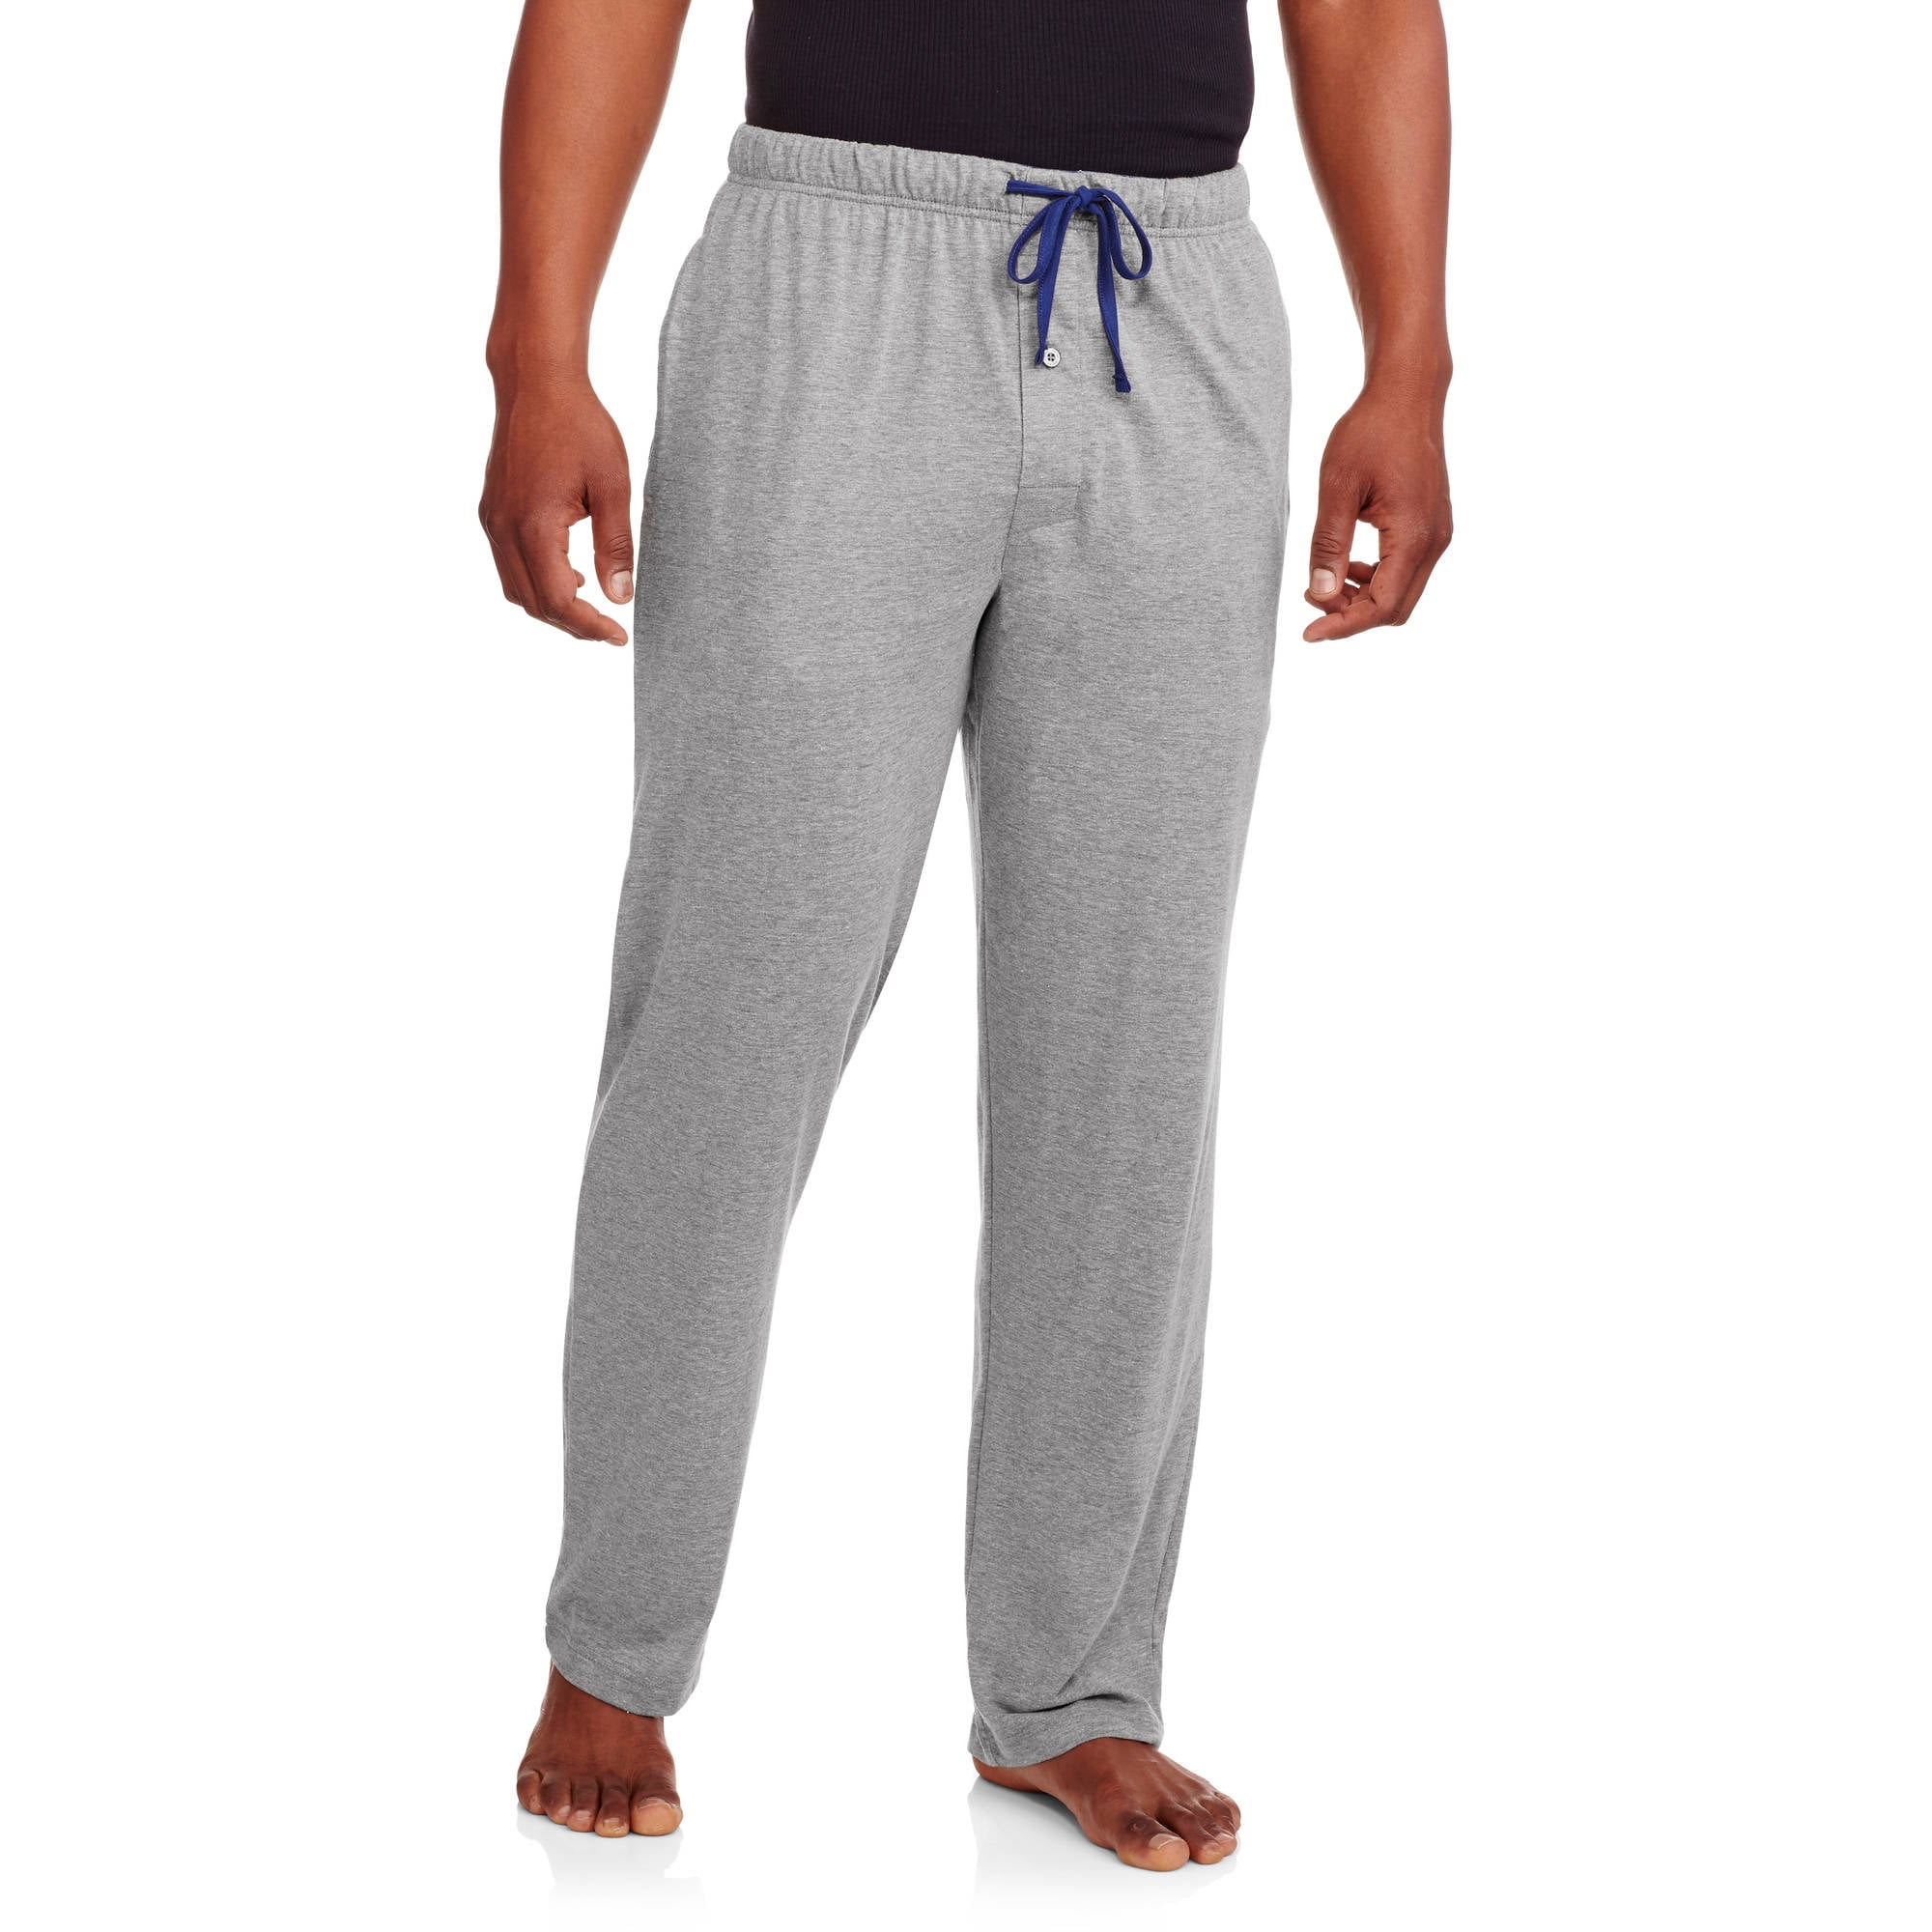 Hanes Men's Solid Knit Sleep Pant